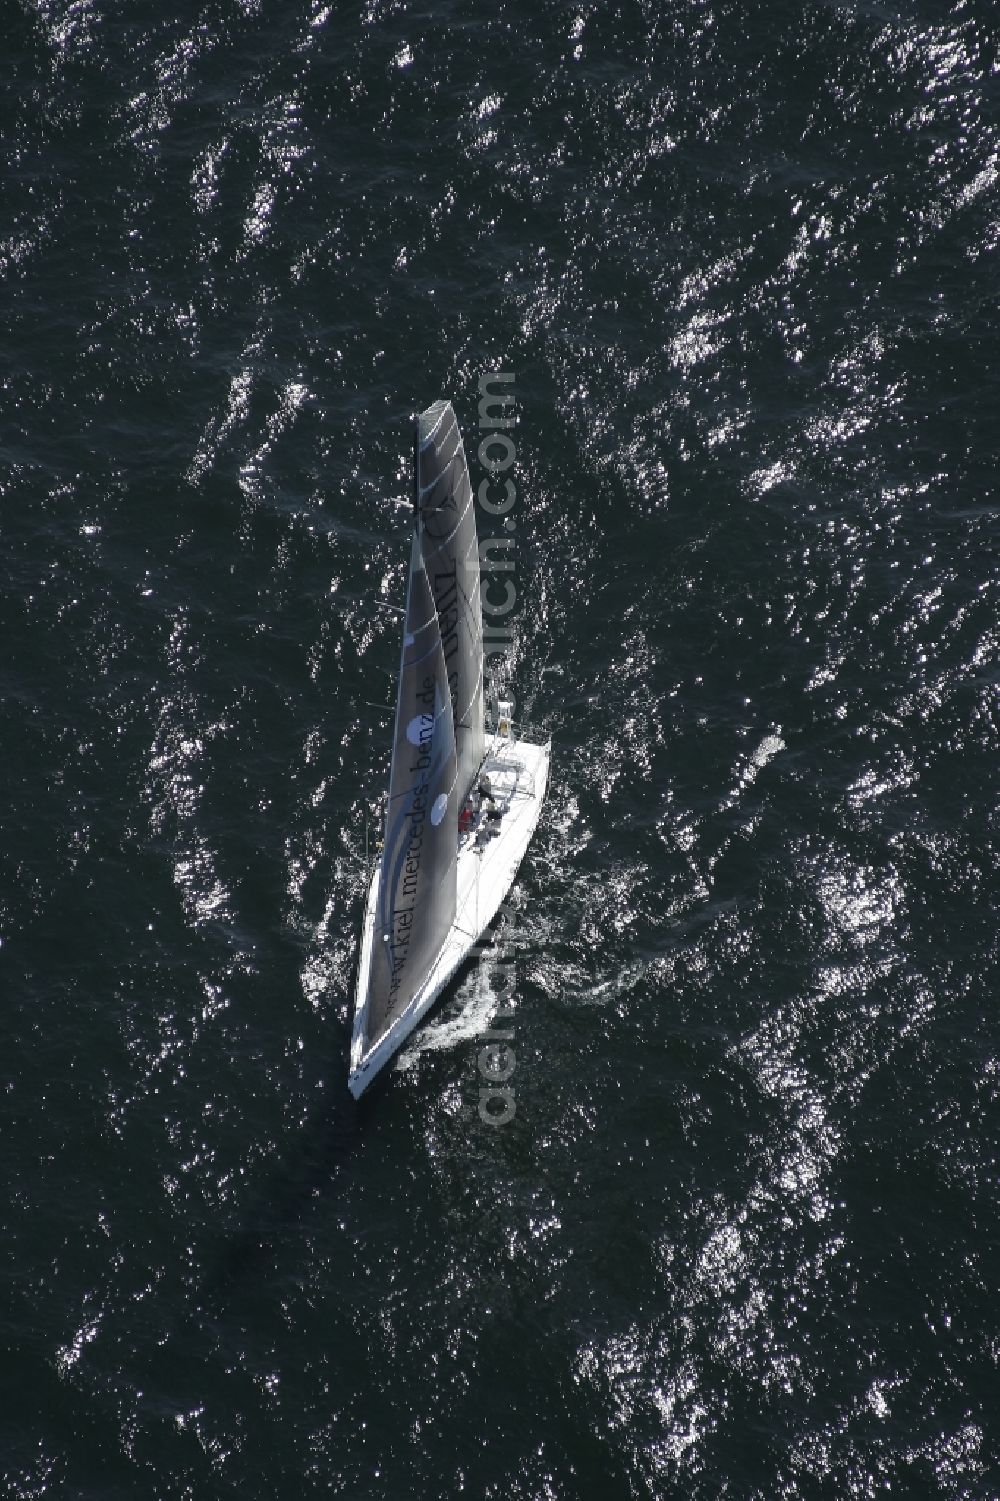 Aerial image Kiel - Offshore sailing racing yacht on the Kiel Fjord in Schleswig-Holstein